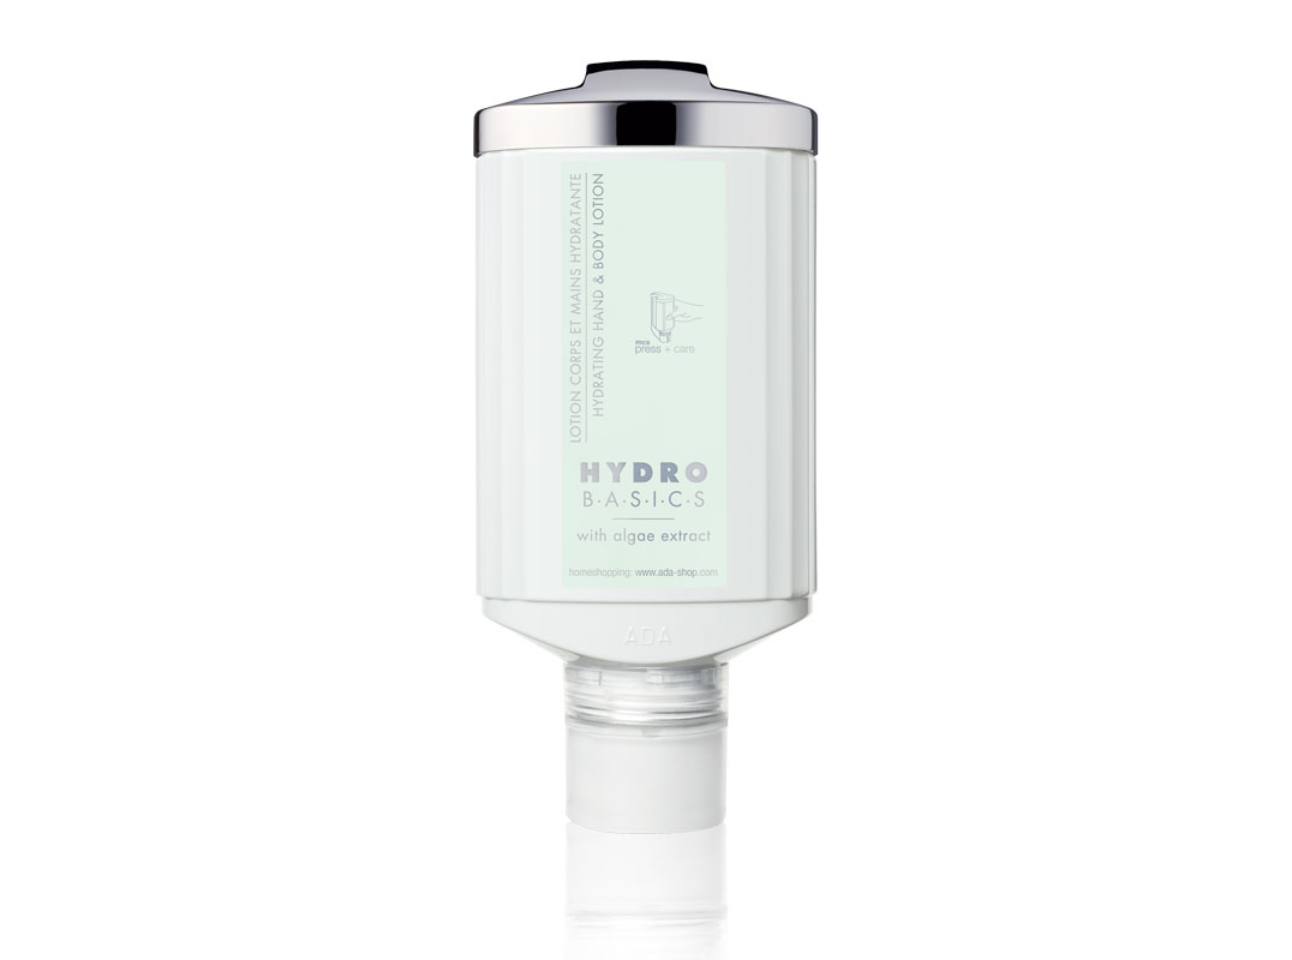 Hydro Basics Pflegende Body Lotion - press + care, 300ml